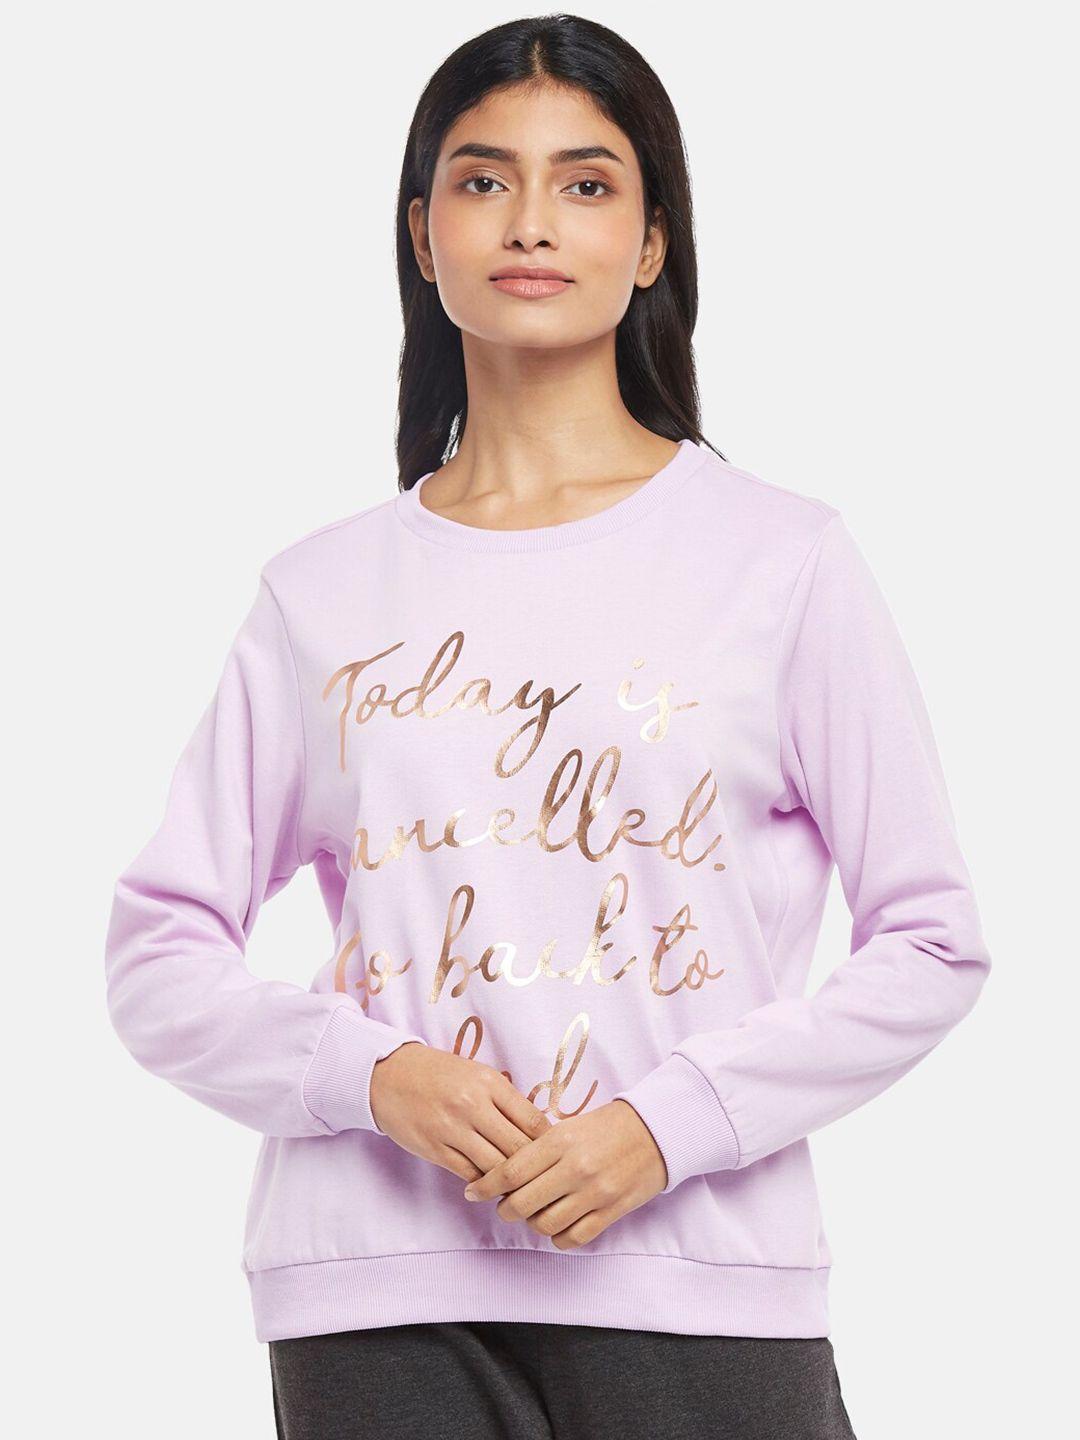 dreamz-by-pantaloons-women-printed-sweatshirt